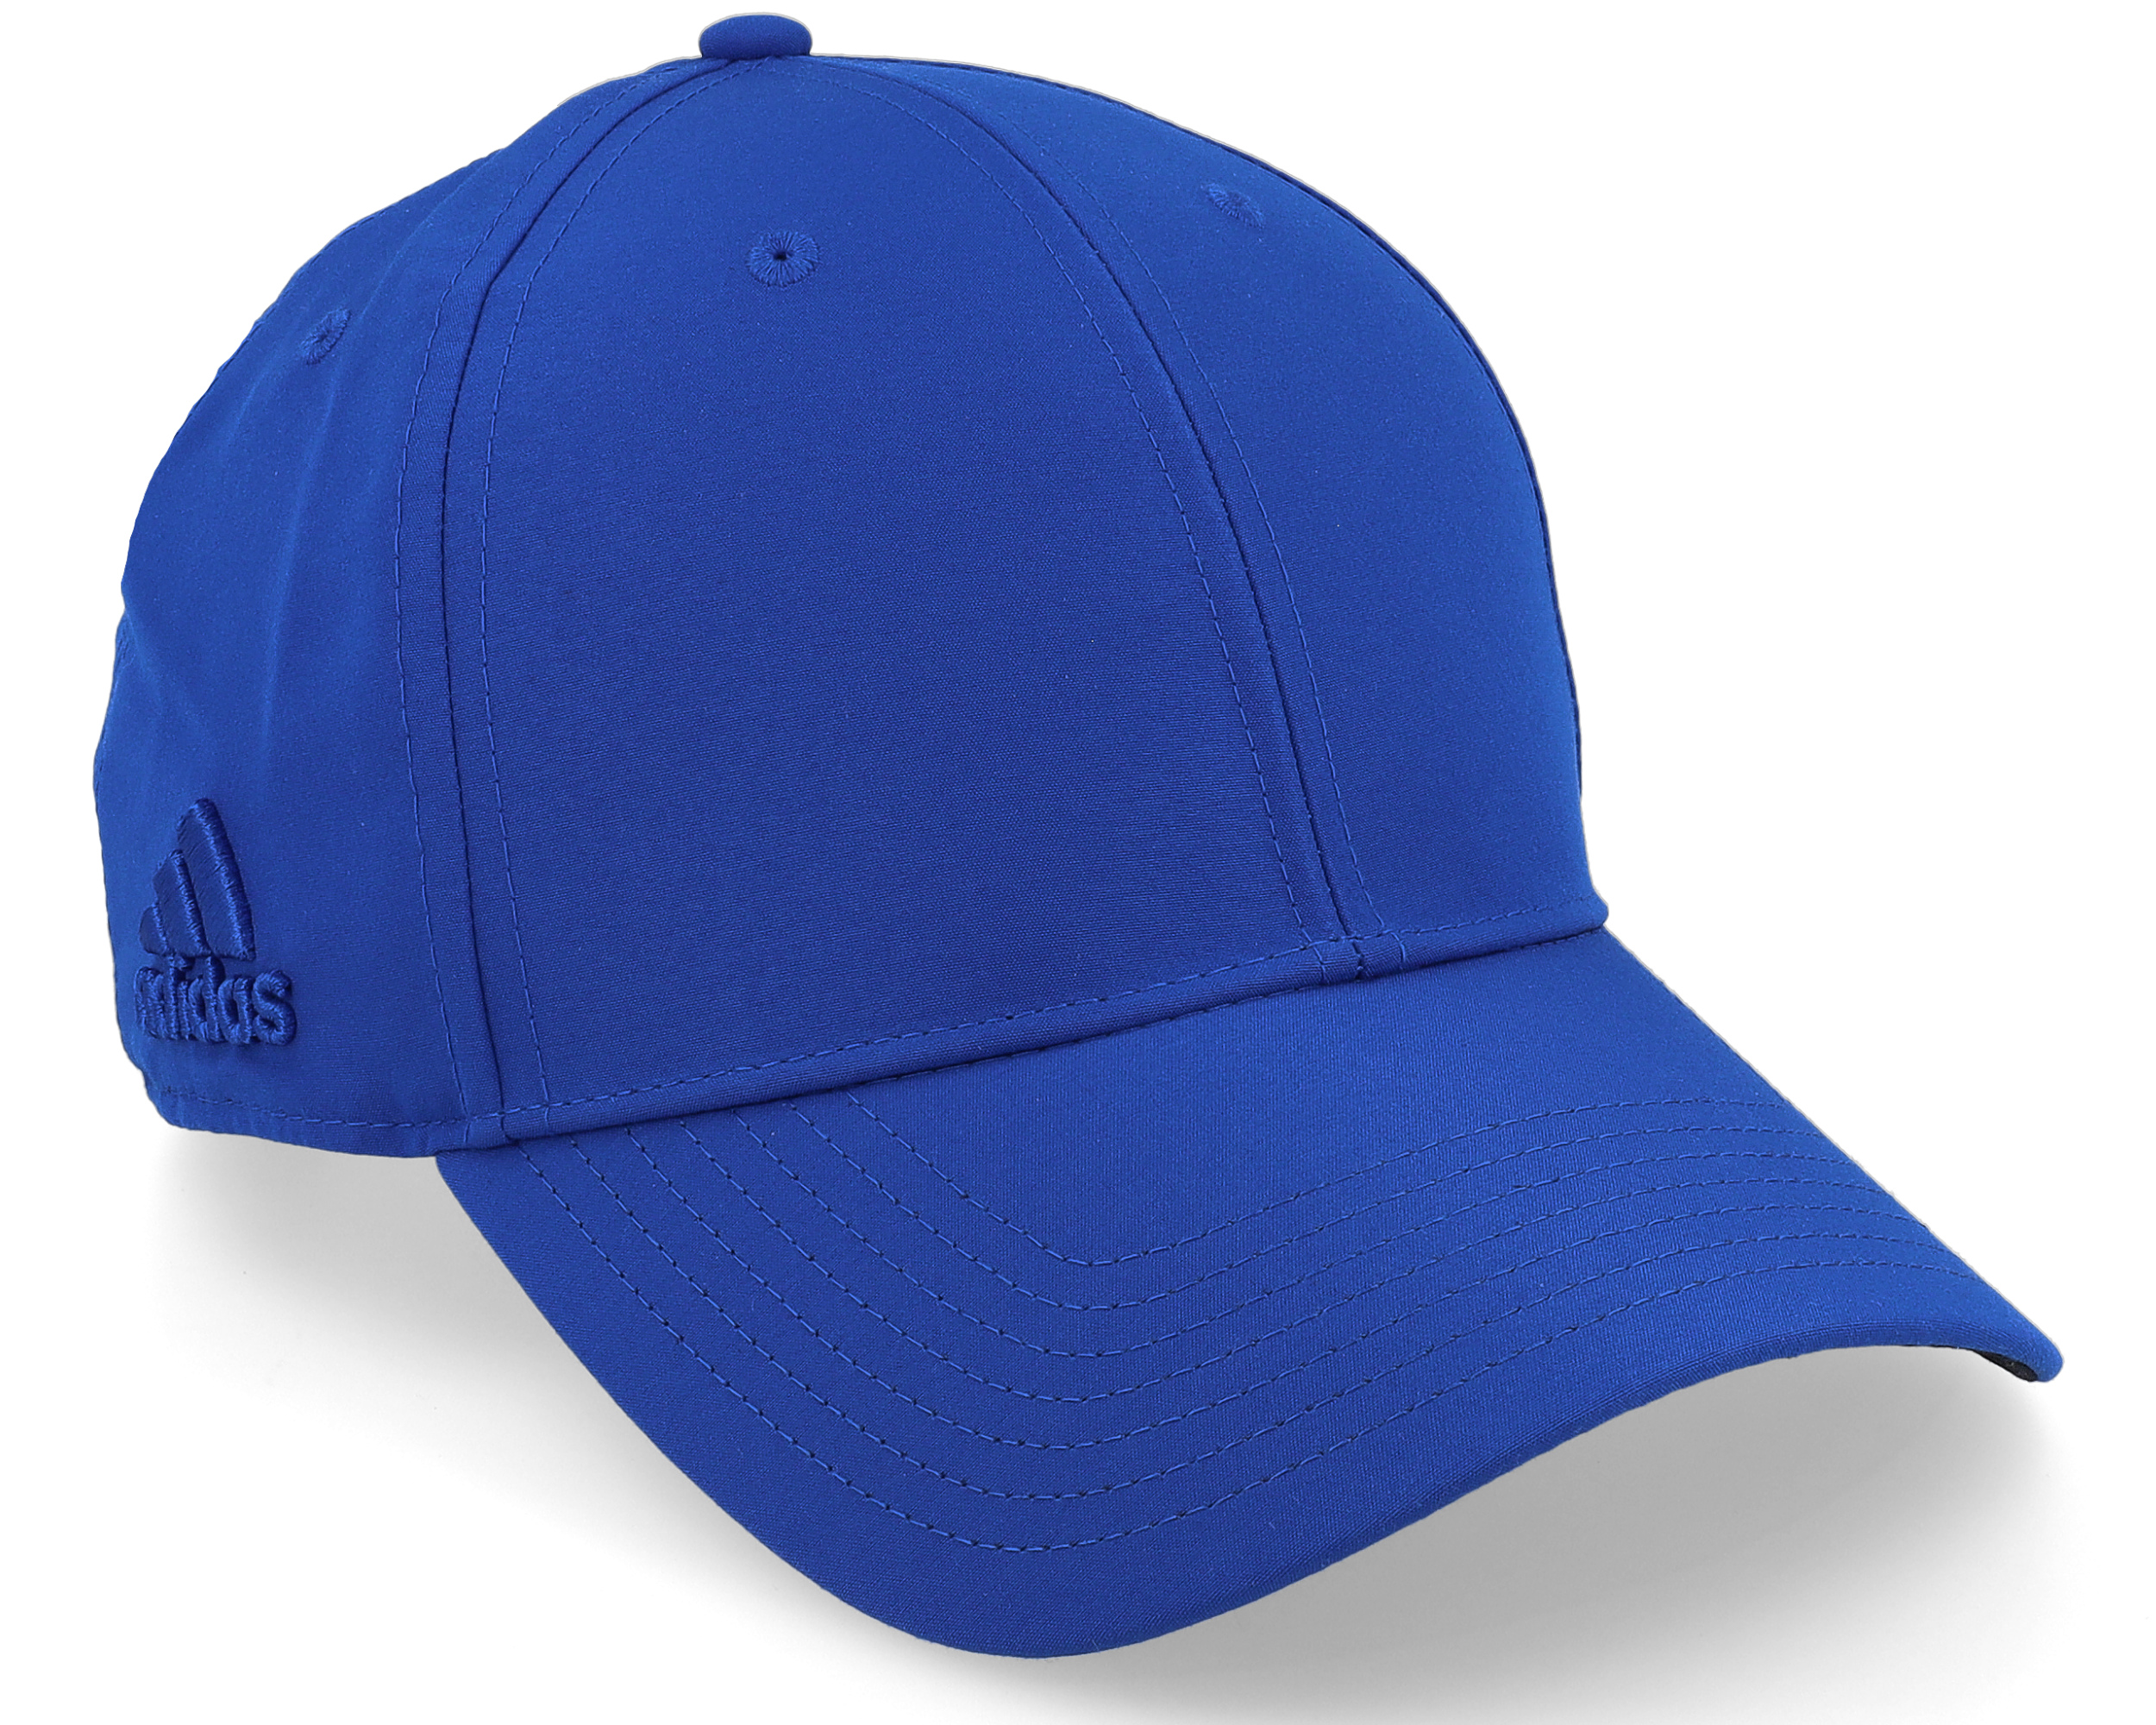 Golf Perf Crst Team Royal Blue Adjustable - Adidas